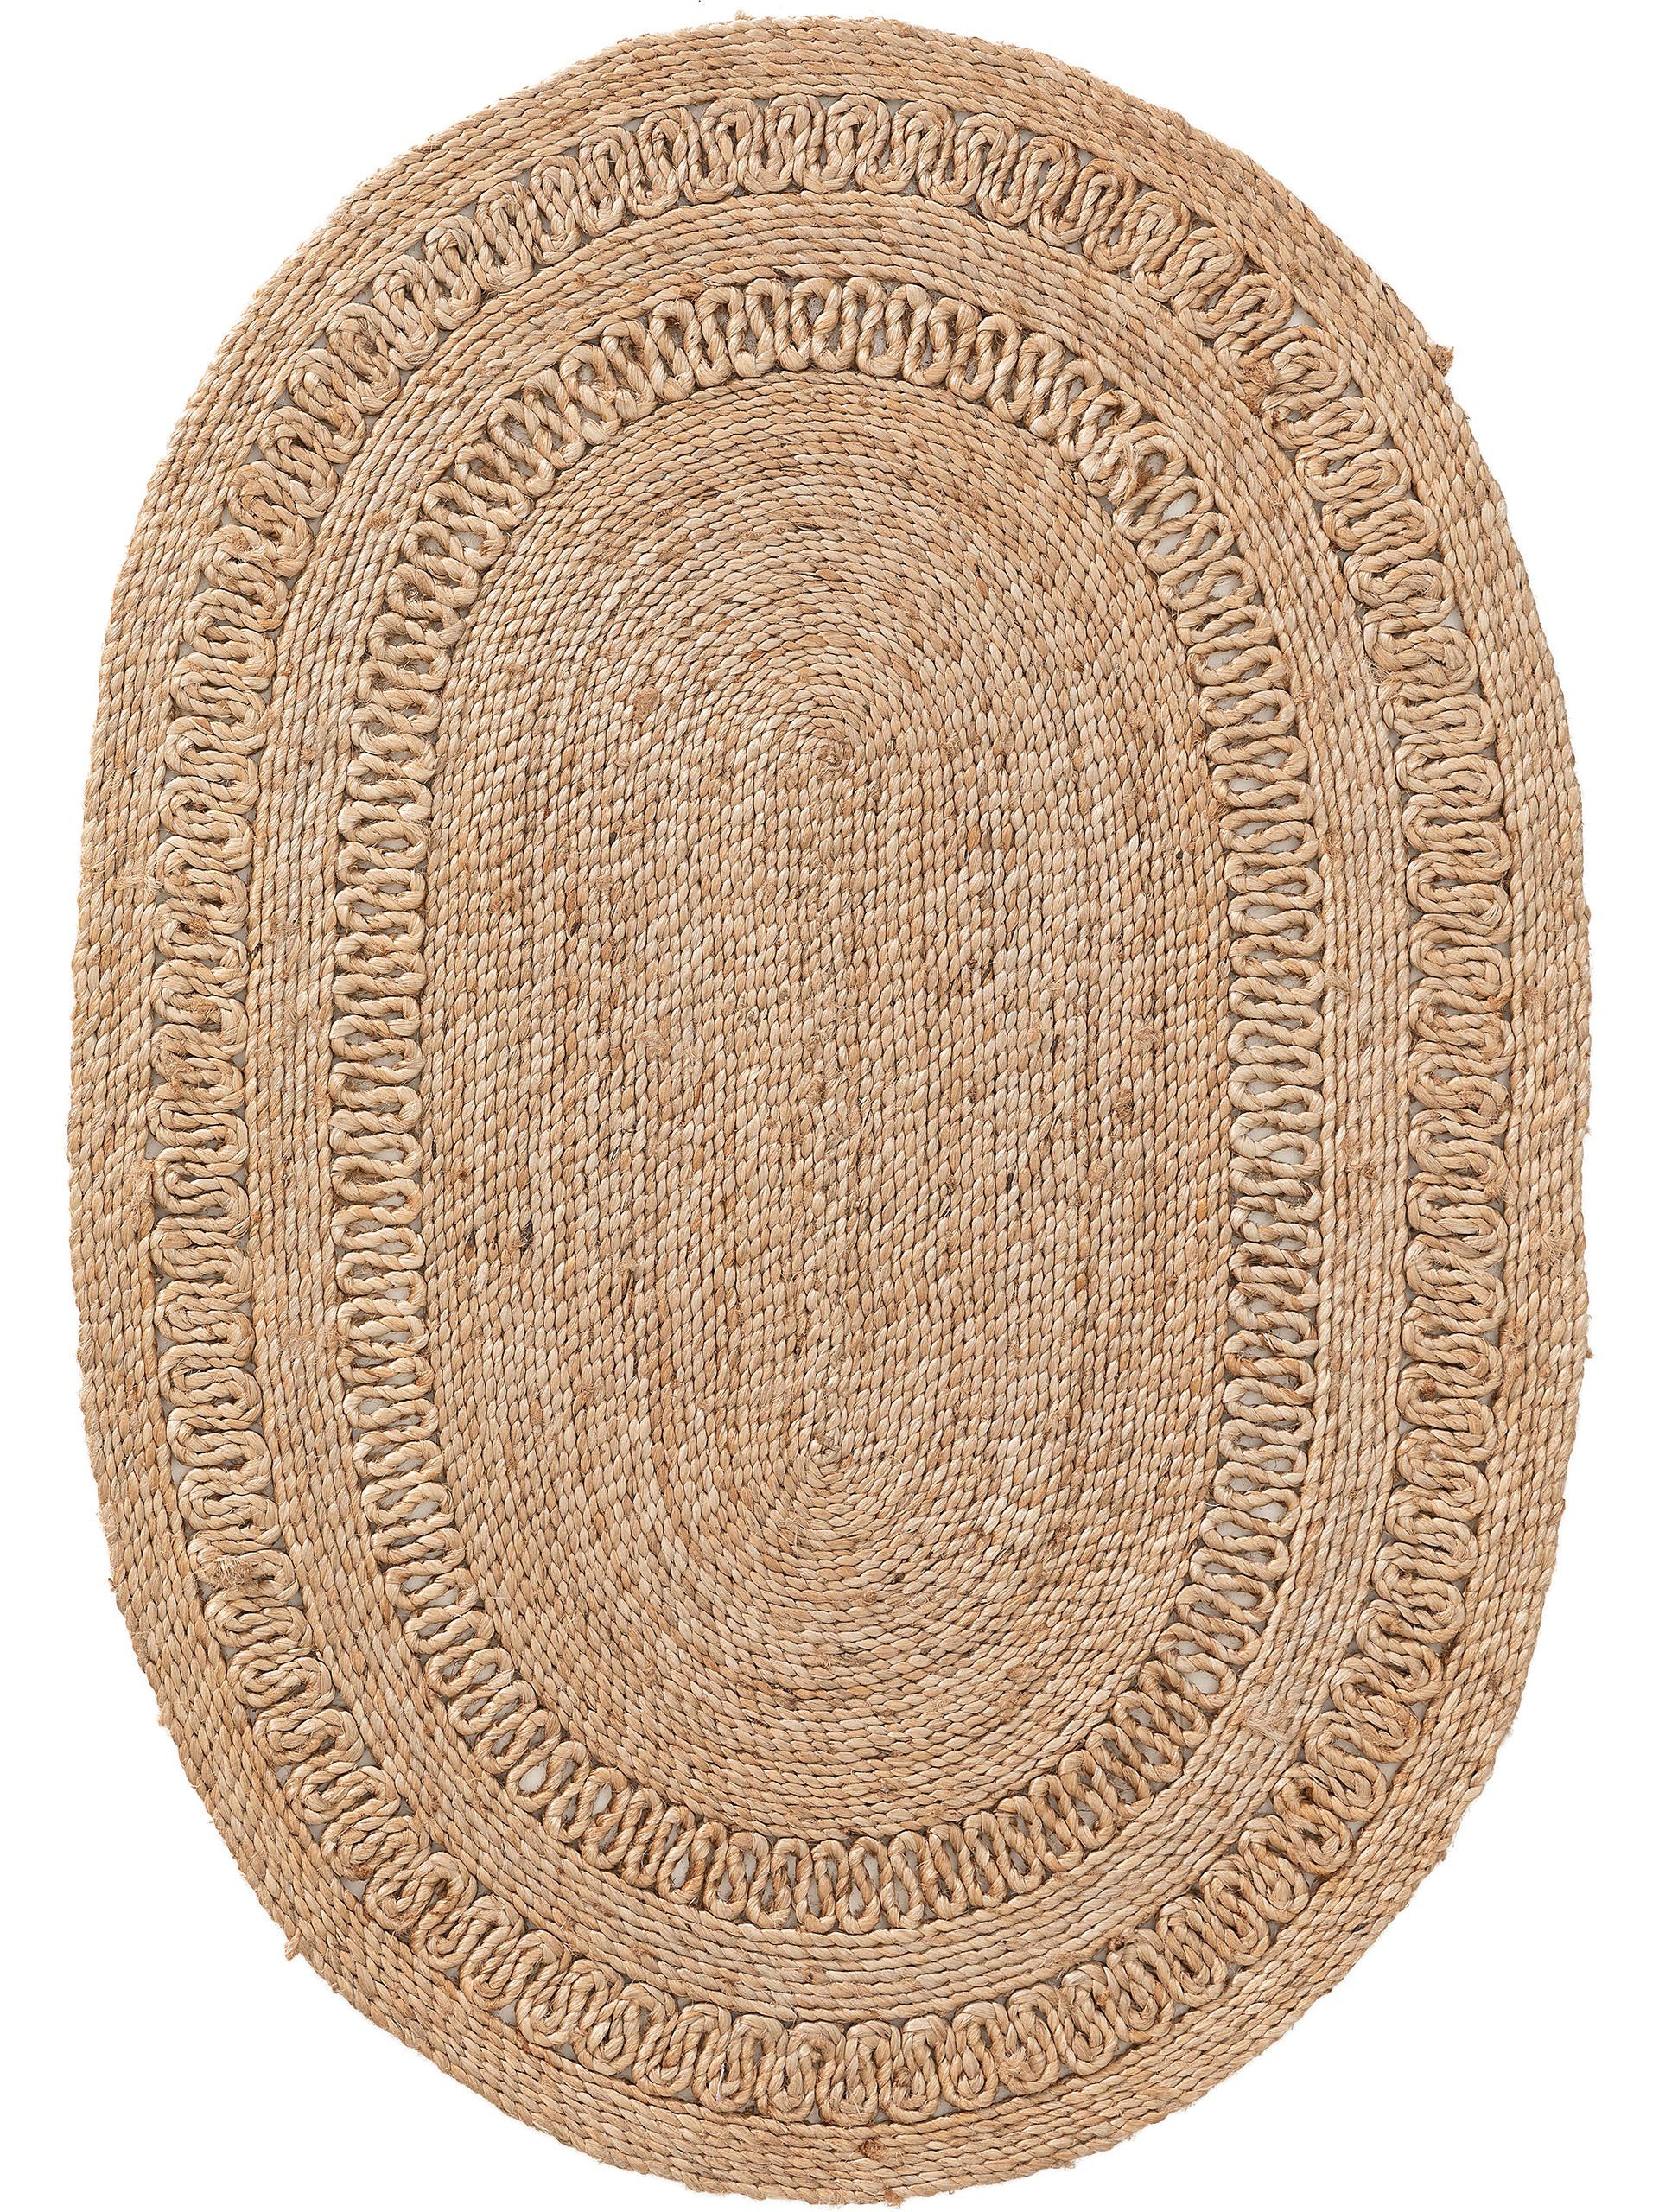 Teppich Kamala, benuta, oval, Höhe: 6 mm, Kunstfaser, Berber, Ethno-Style, Wohnzimmer